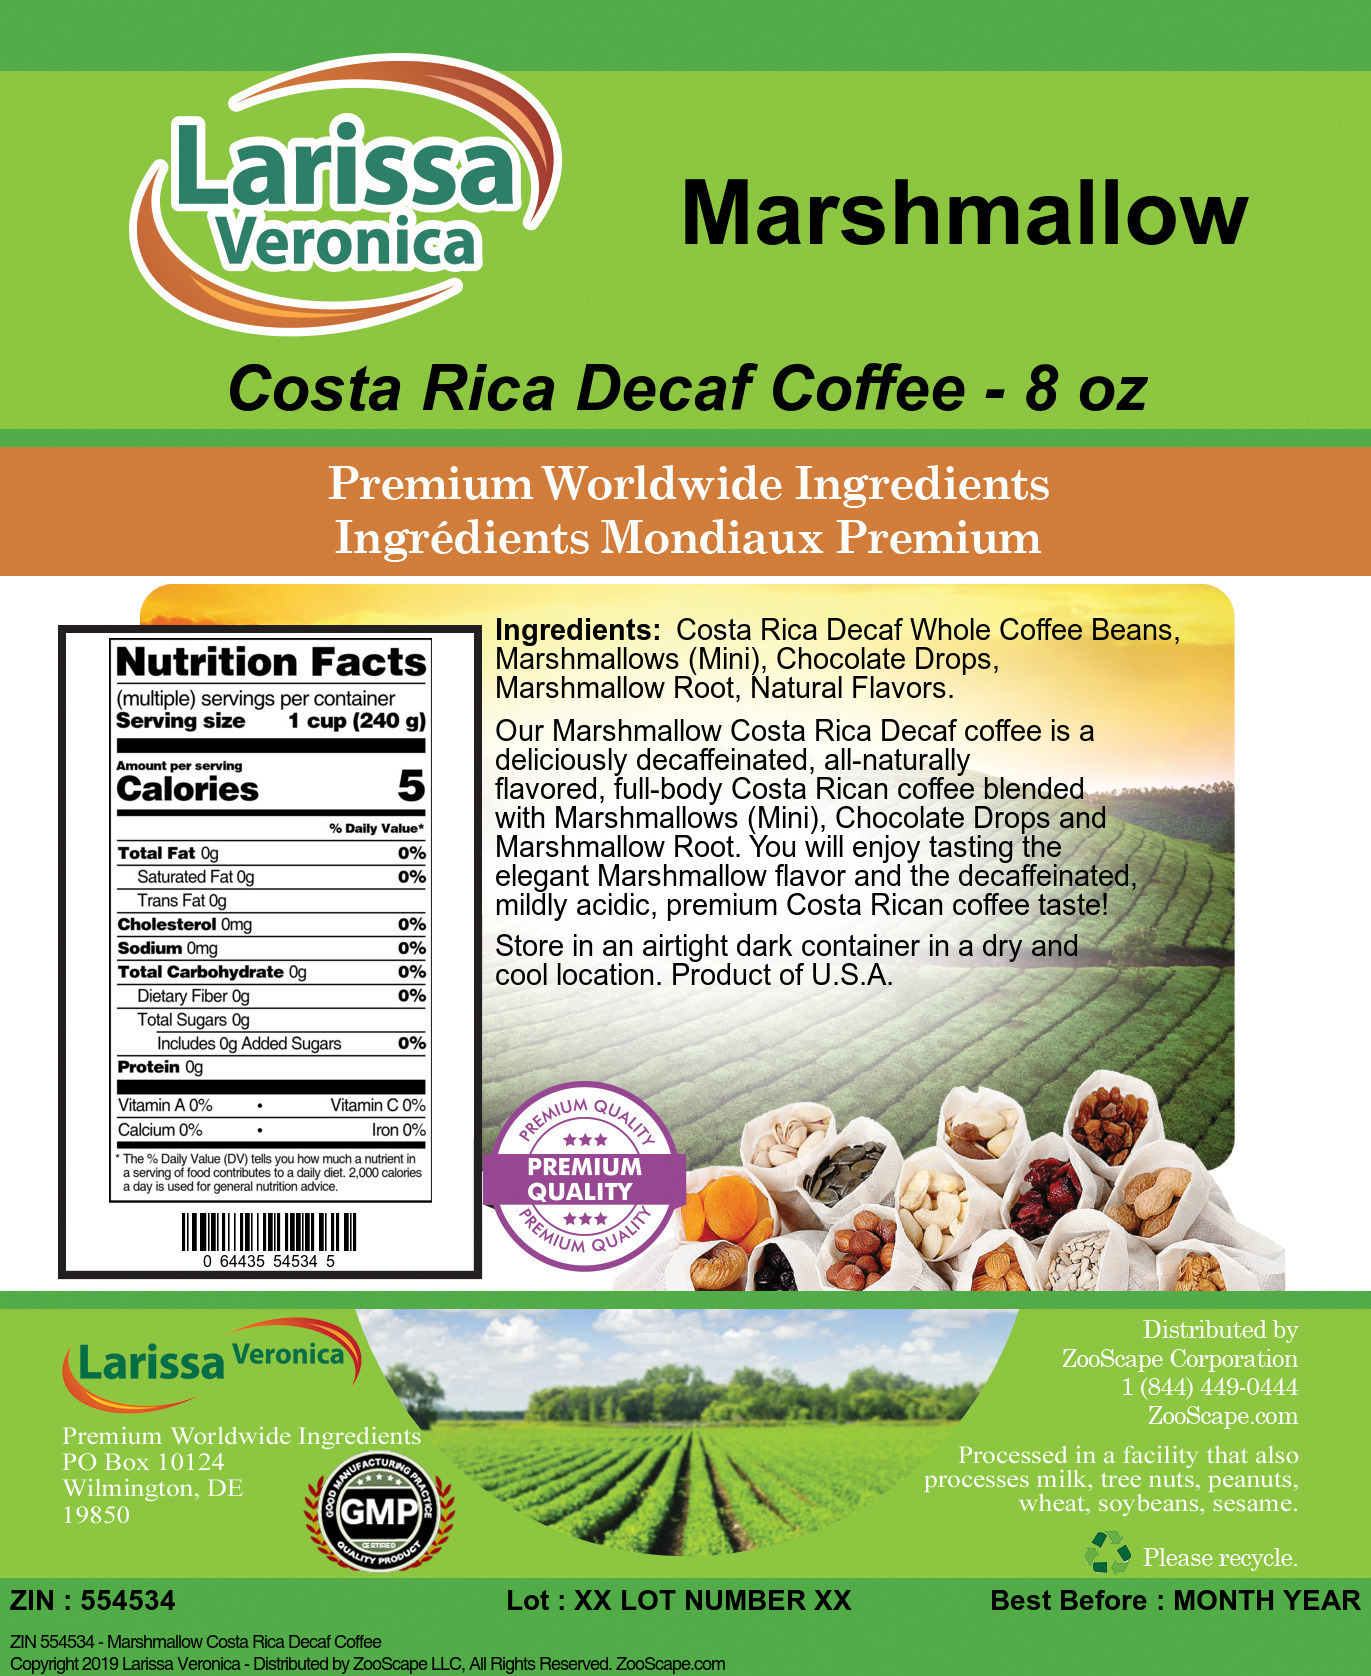 Marshmallow Costa Rica Decaf Coffee - Label